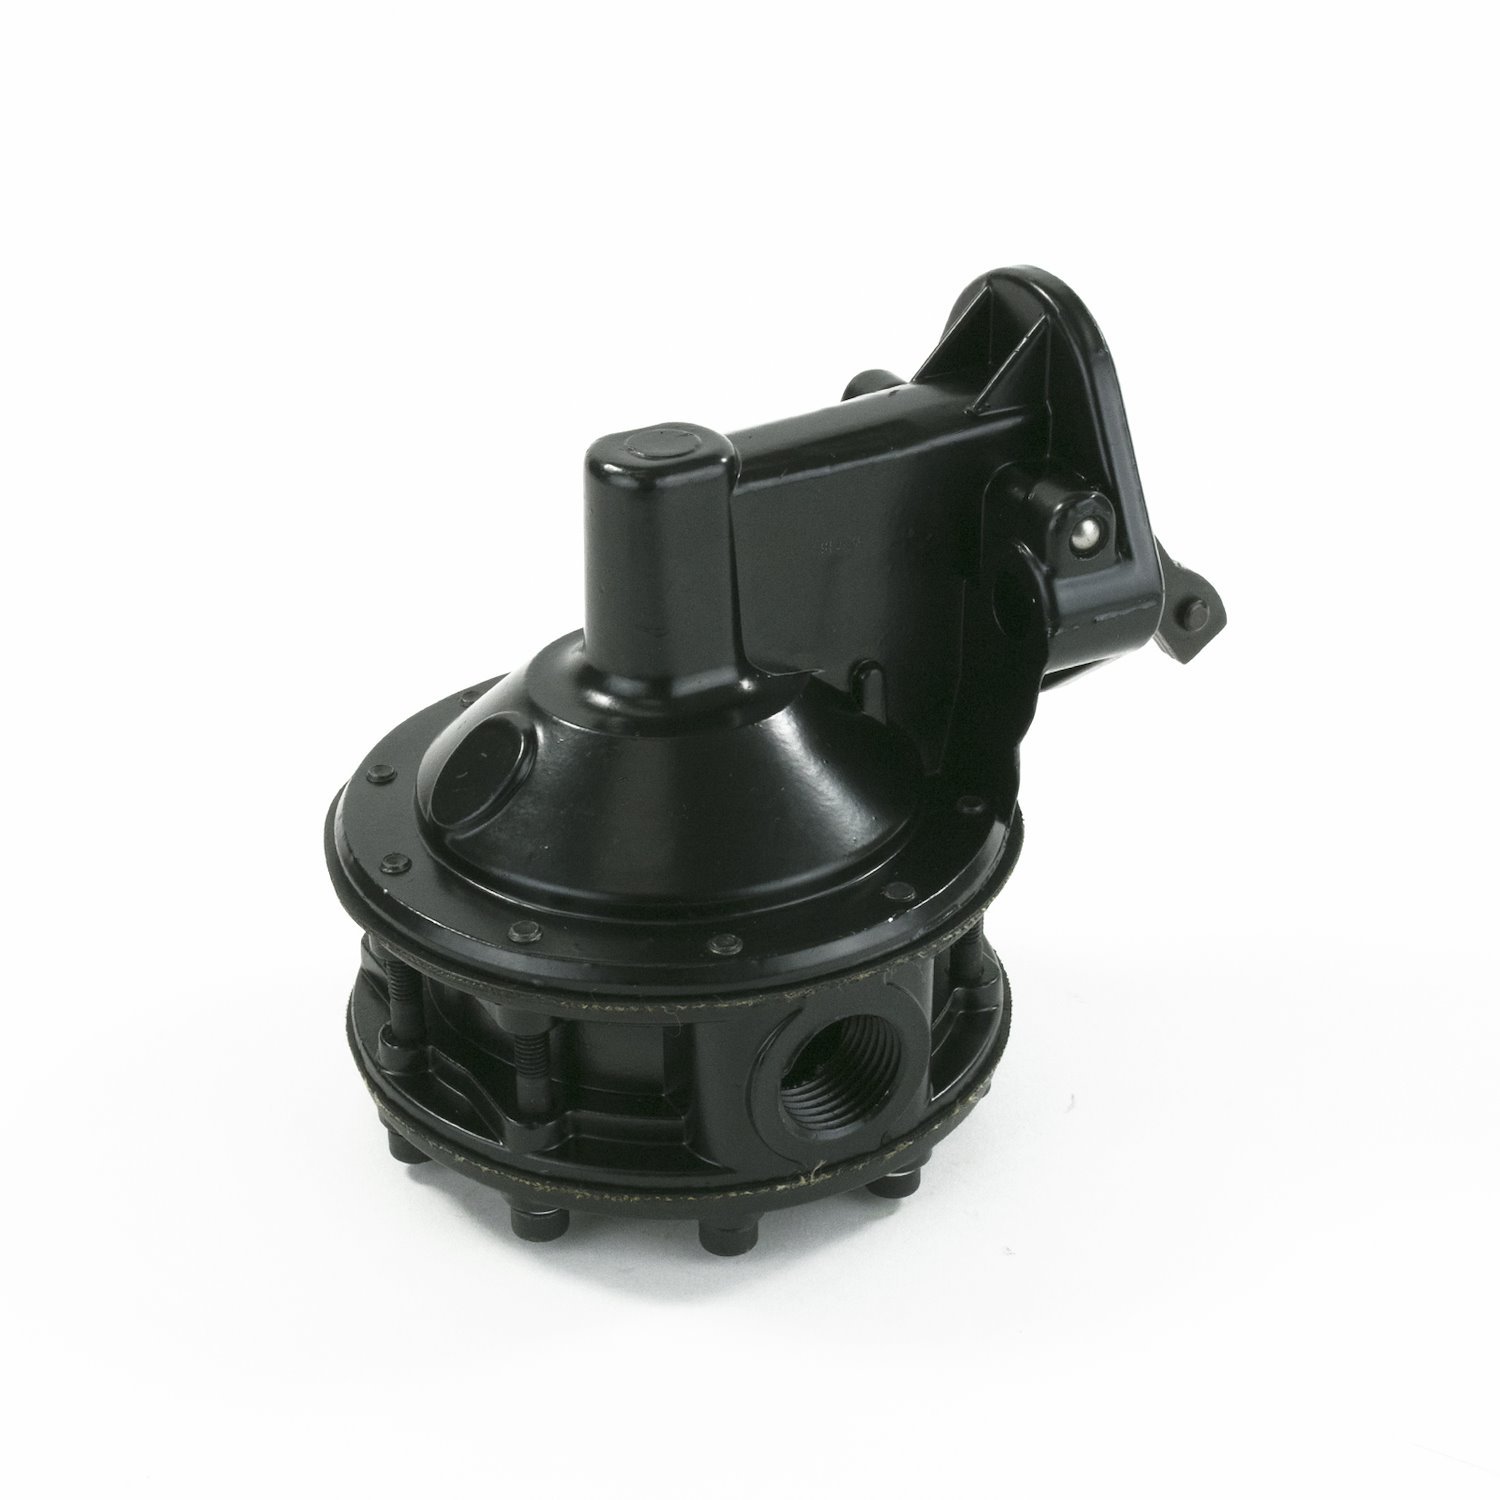 JM1037BK Mechanical Fuel Pump, Six Valve 130 GPH 12-16 PSI SBC (262-400), Black